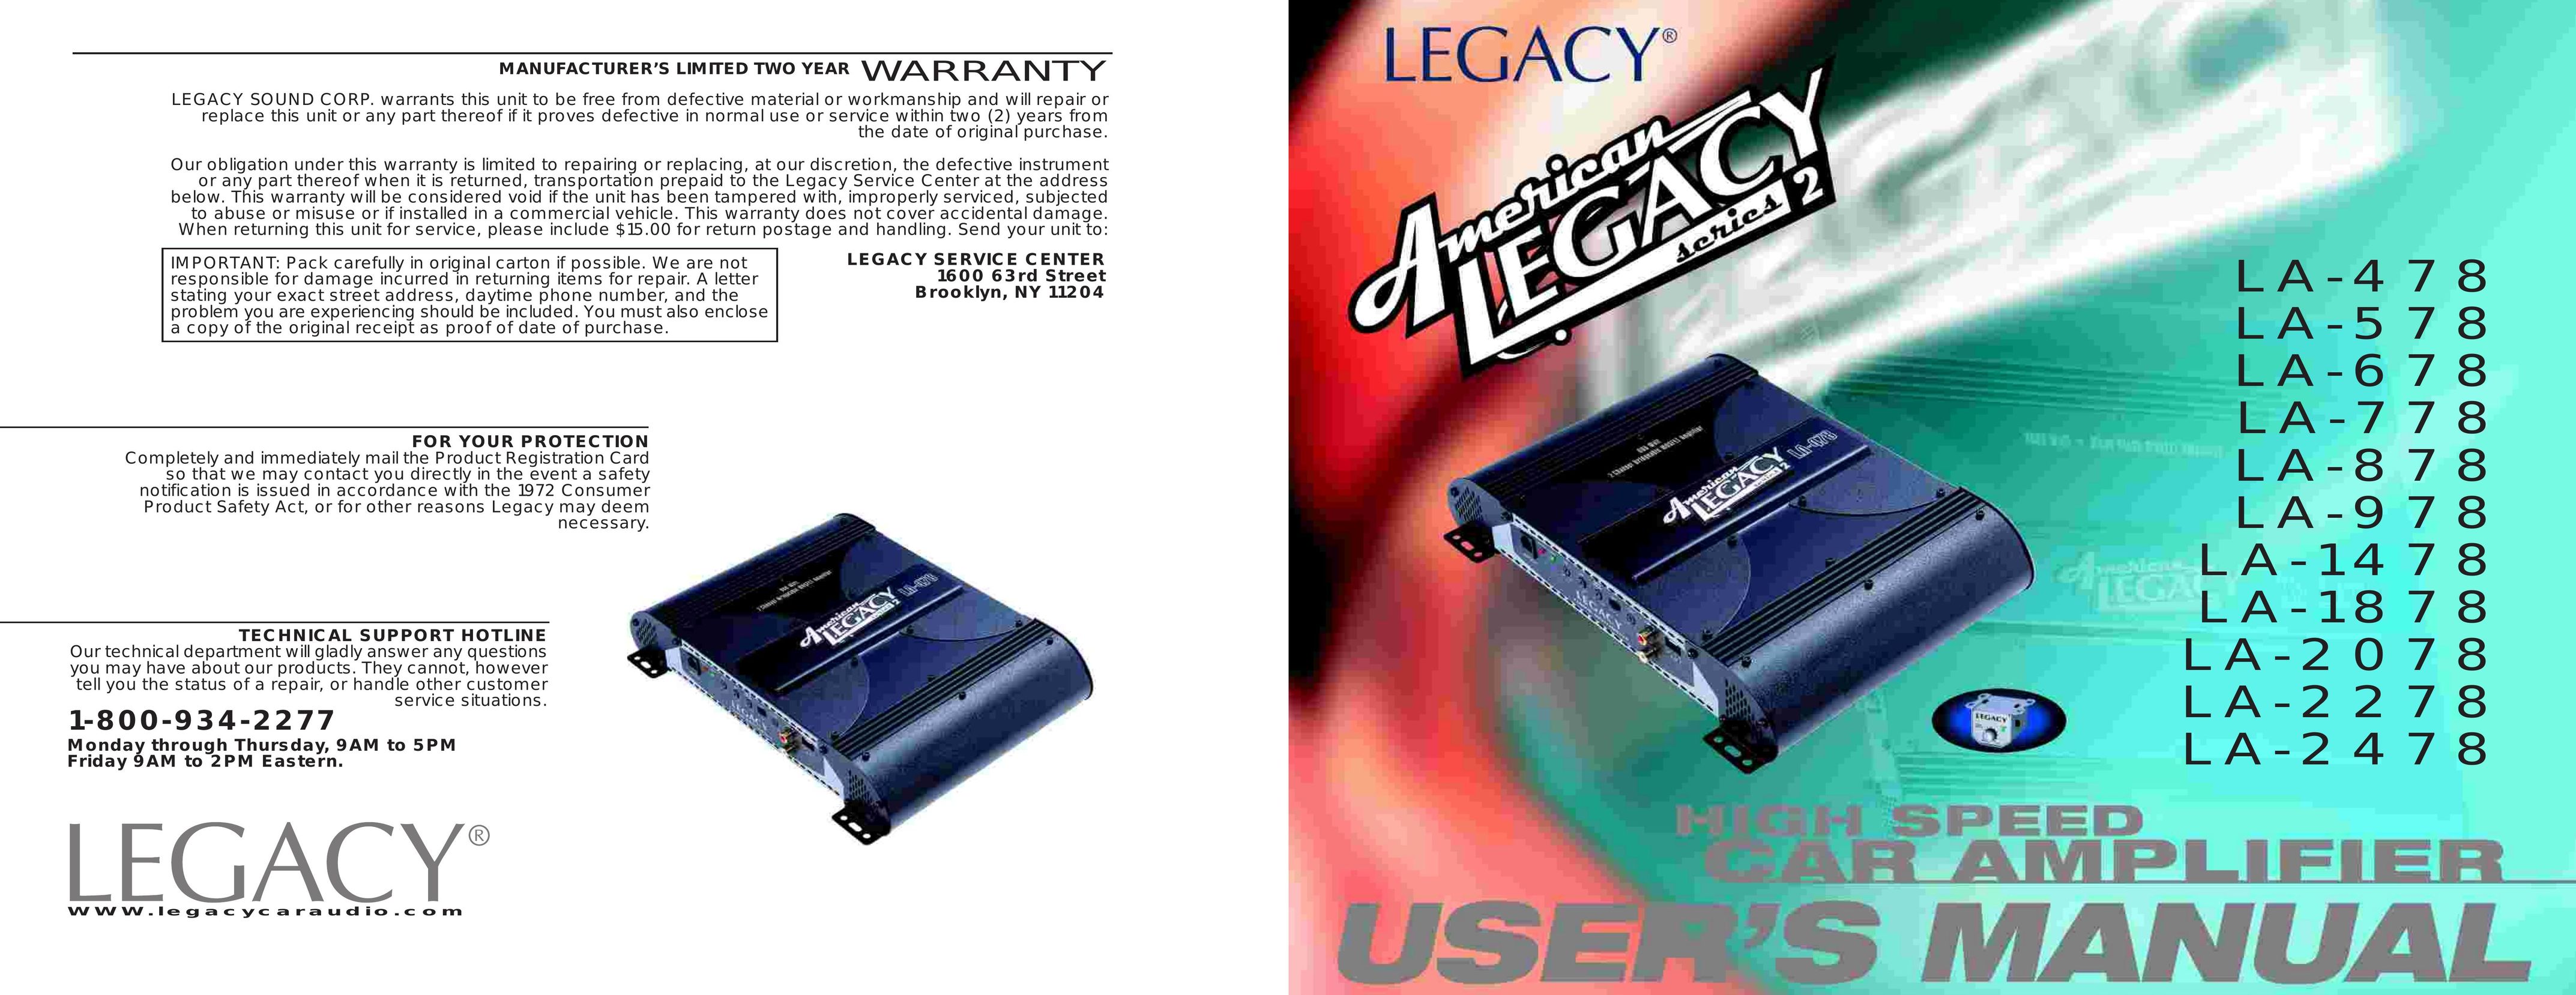 Legacy Car Audio LA-2078 Car Amplifier User Manual